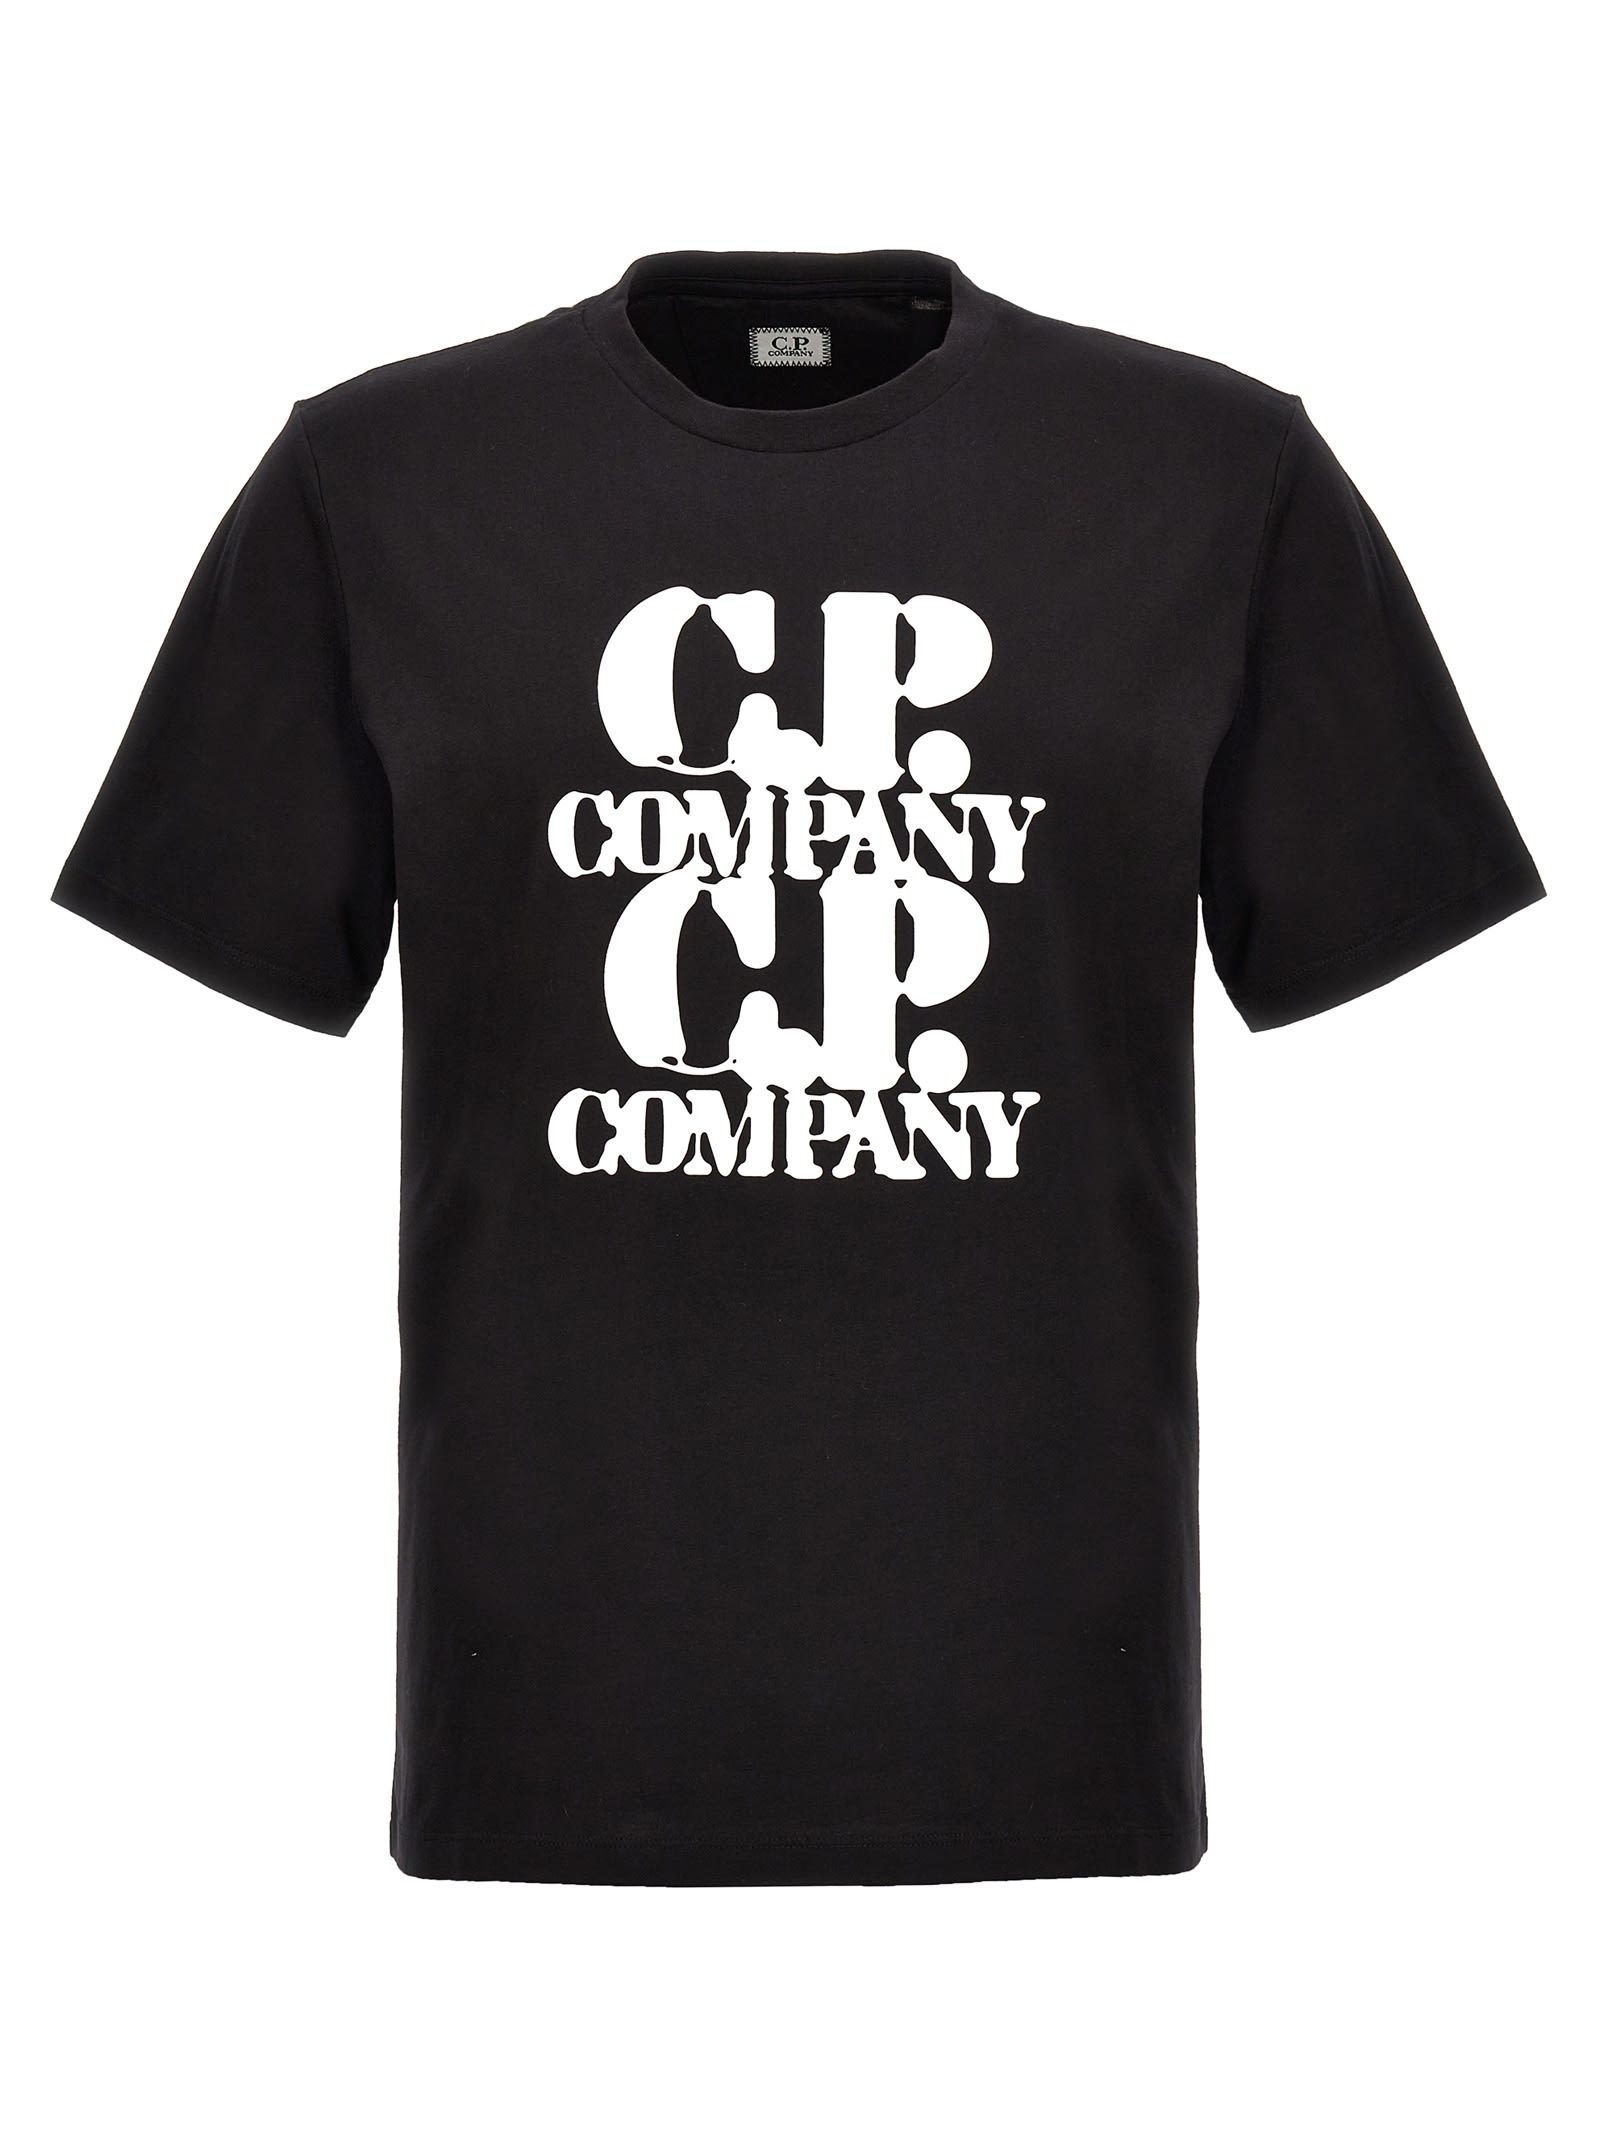 C.P. COMPANY GRAPHIC T-SHIRT